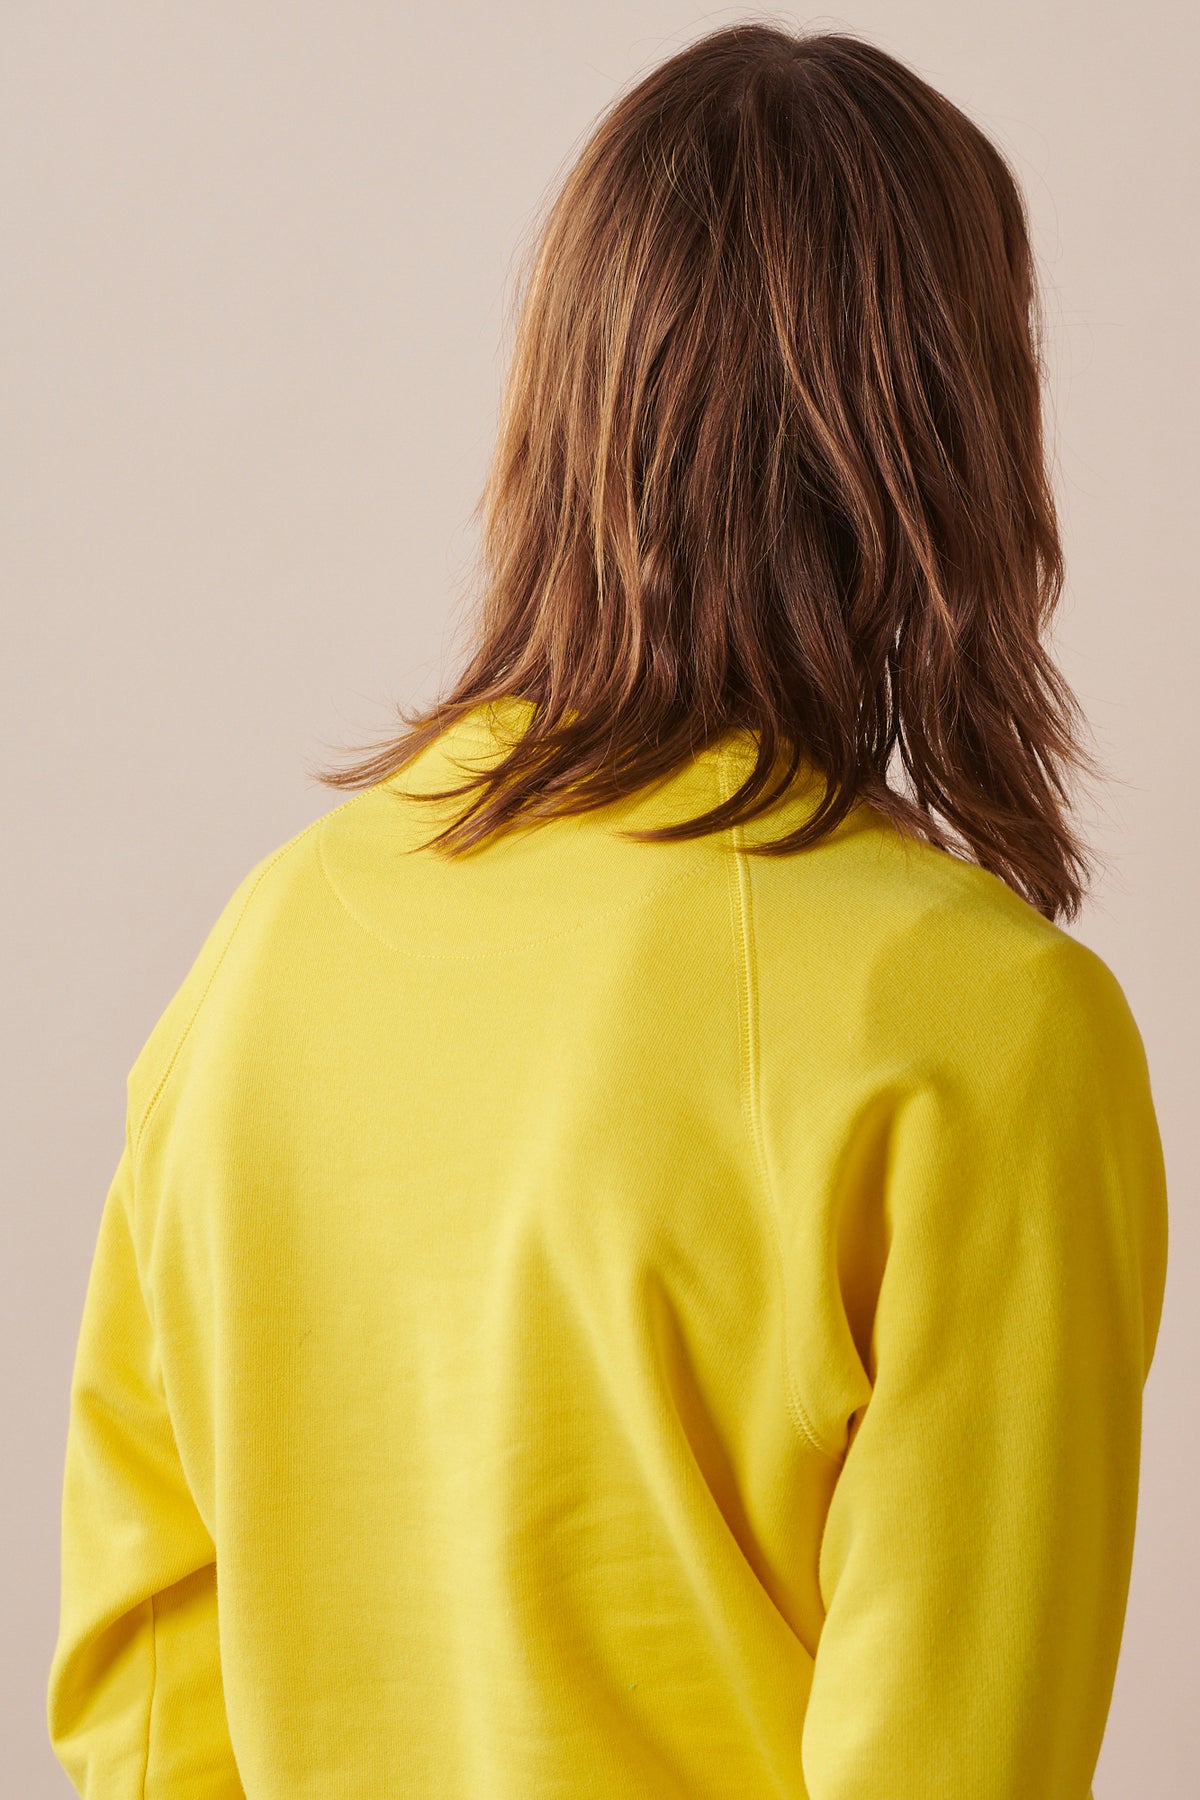 
            Back of male wearing raglan sweatshirt in canary yellow